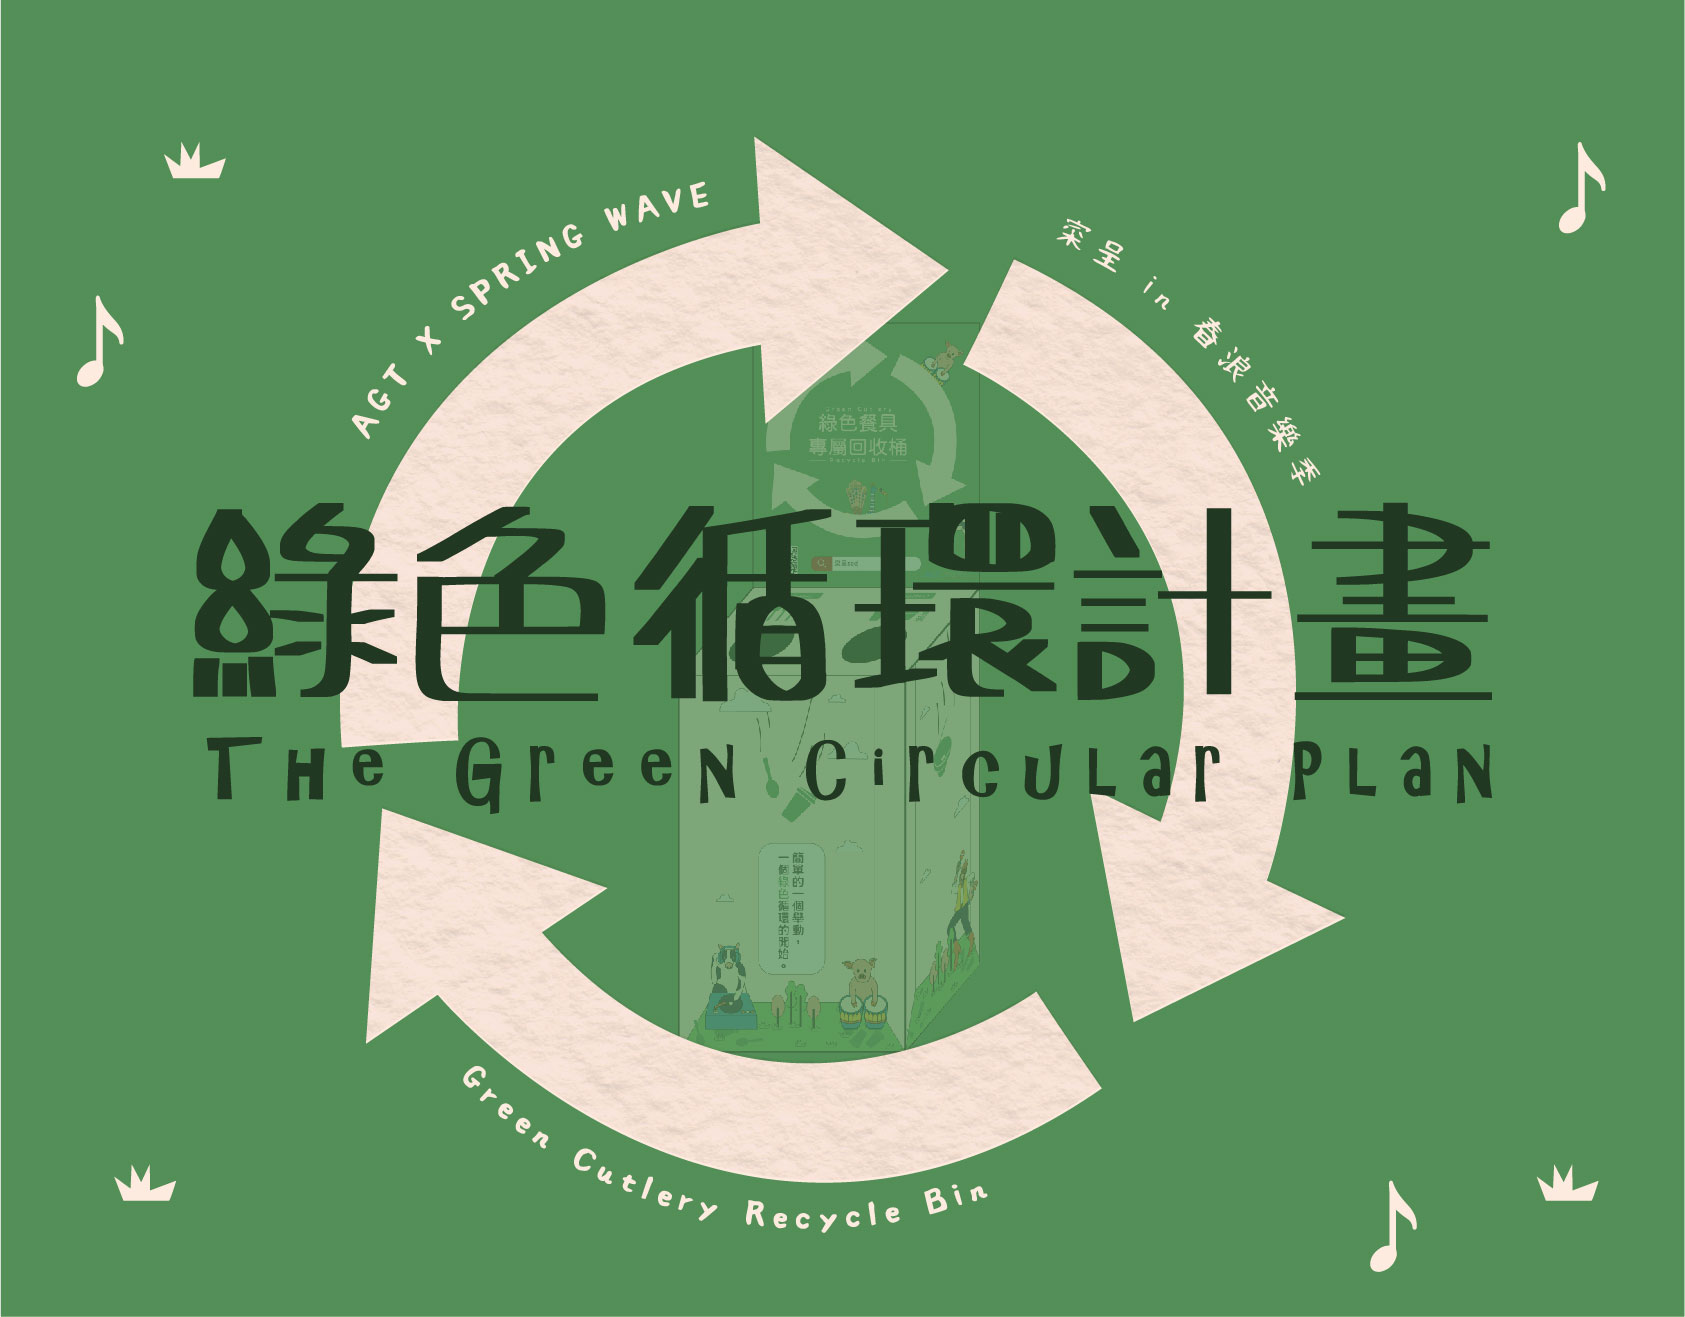 The Green Circular Plan